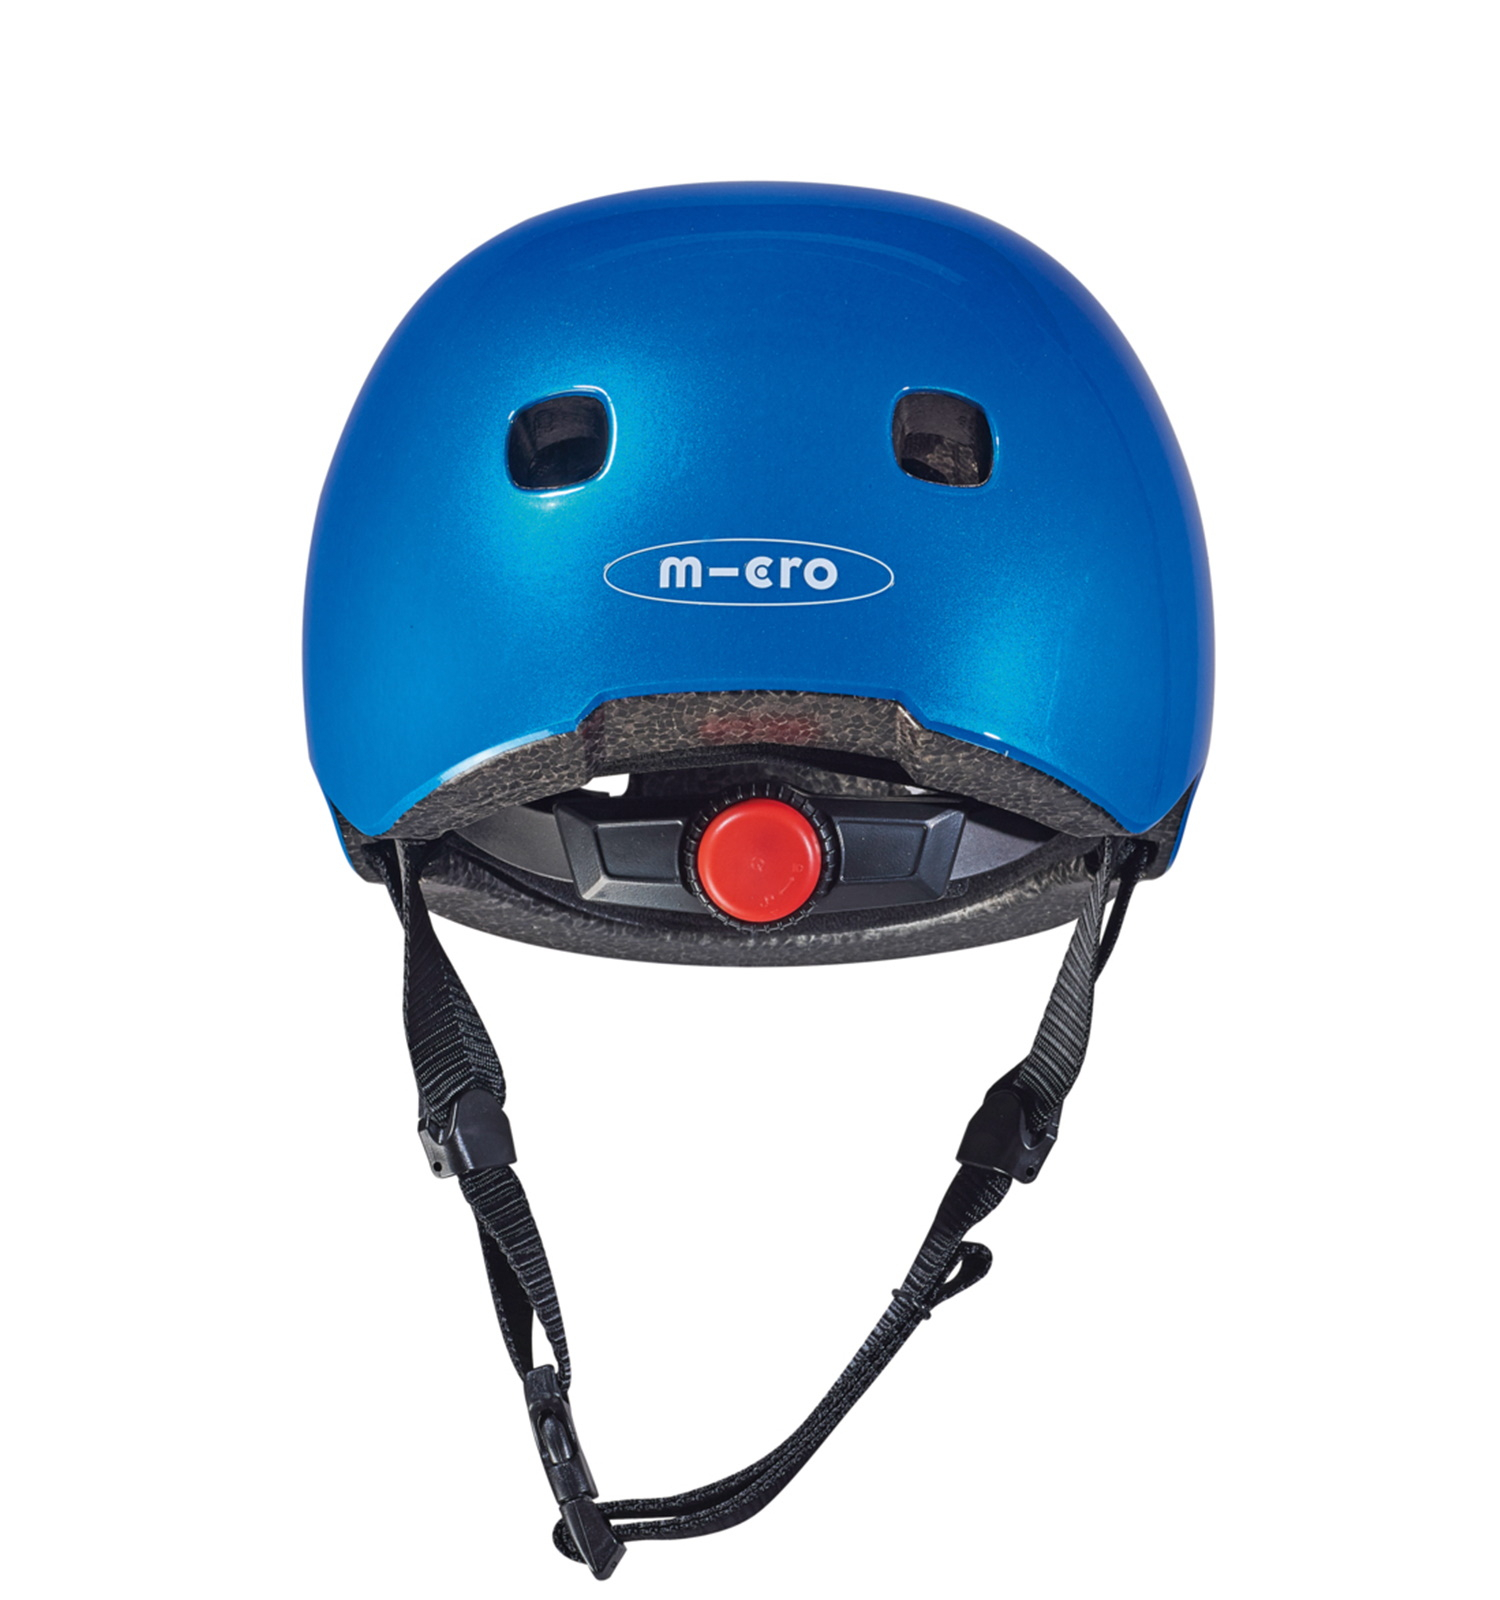 Micro helmet V2